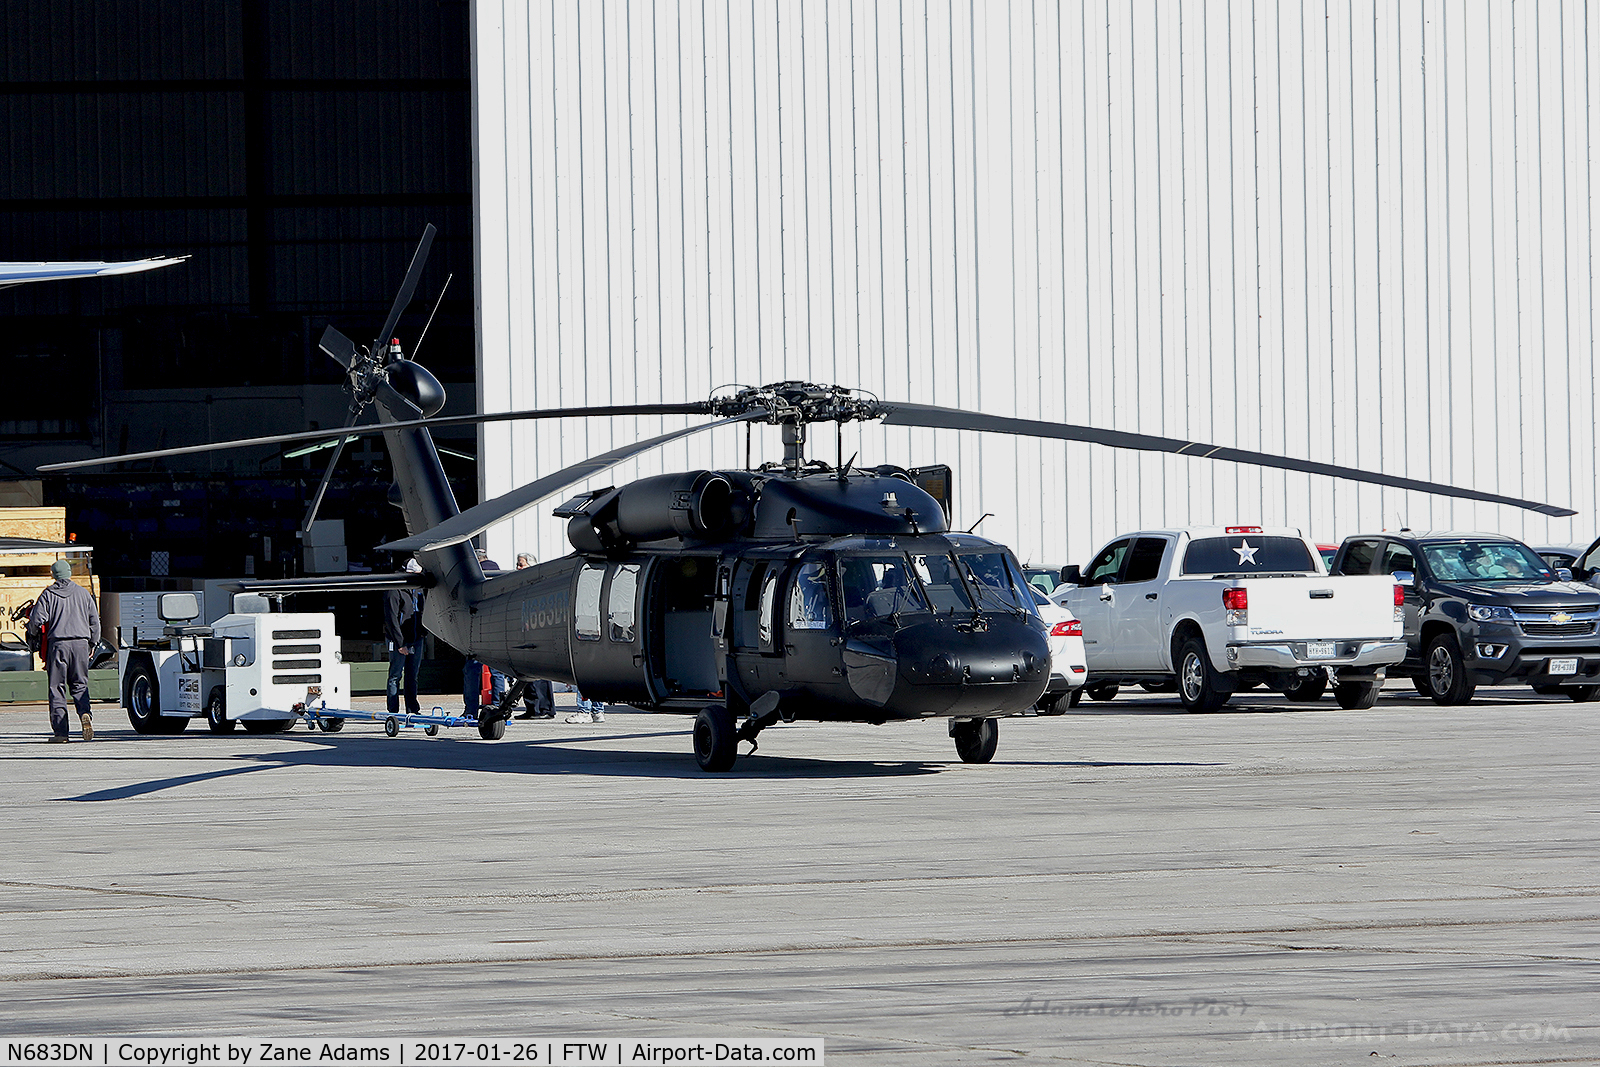 N683DN, 1982 Sikorsky UH-60A Black Hawk C/N 70-506, At Meacham Field - Fort Worth, TX